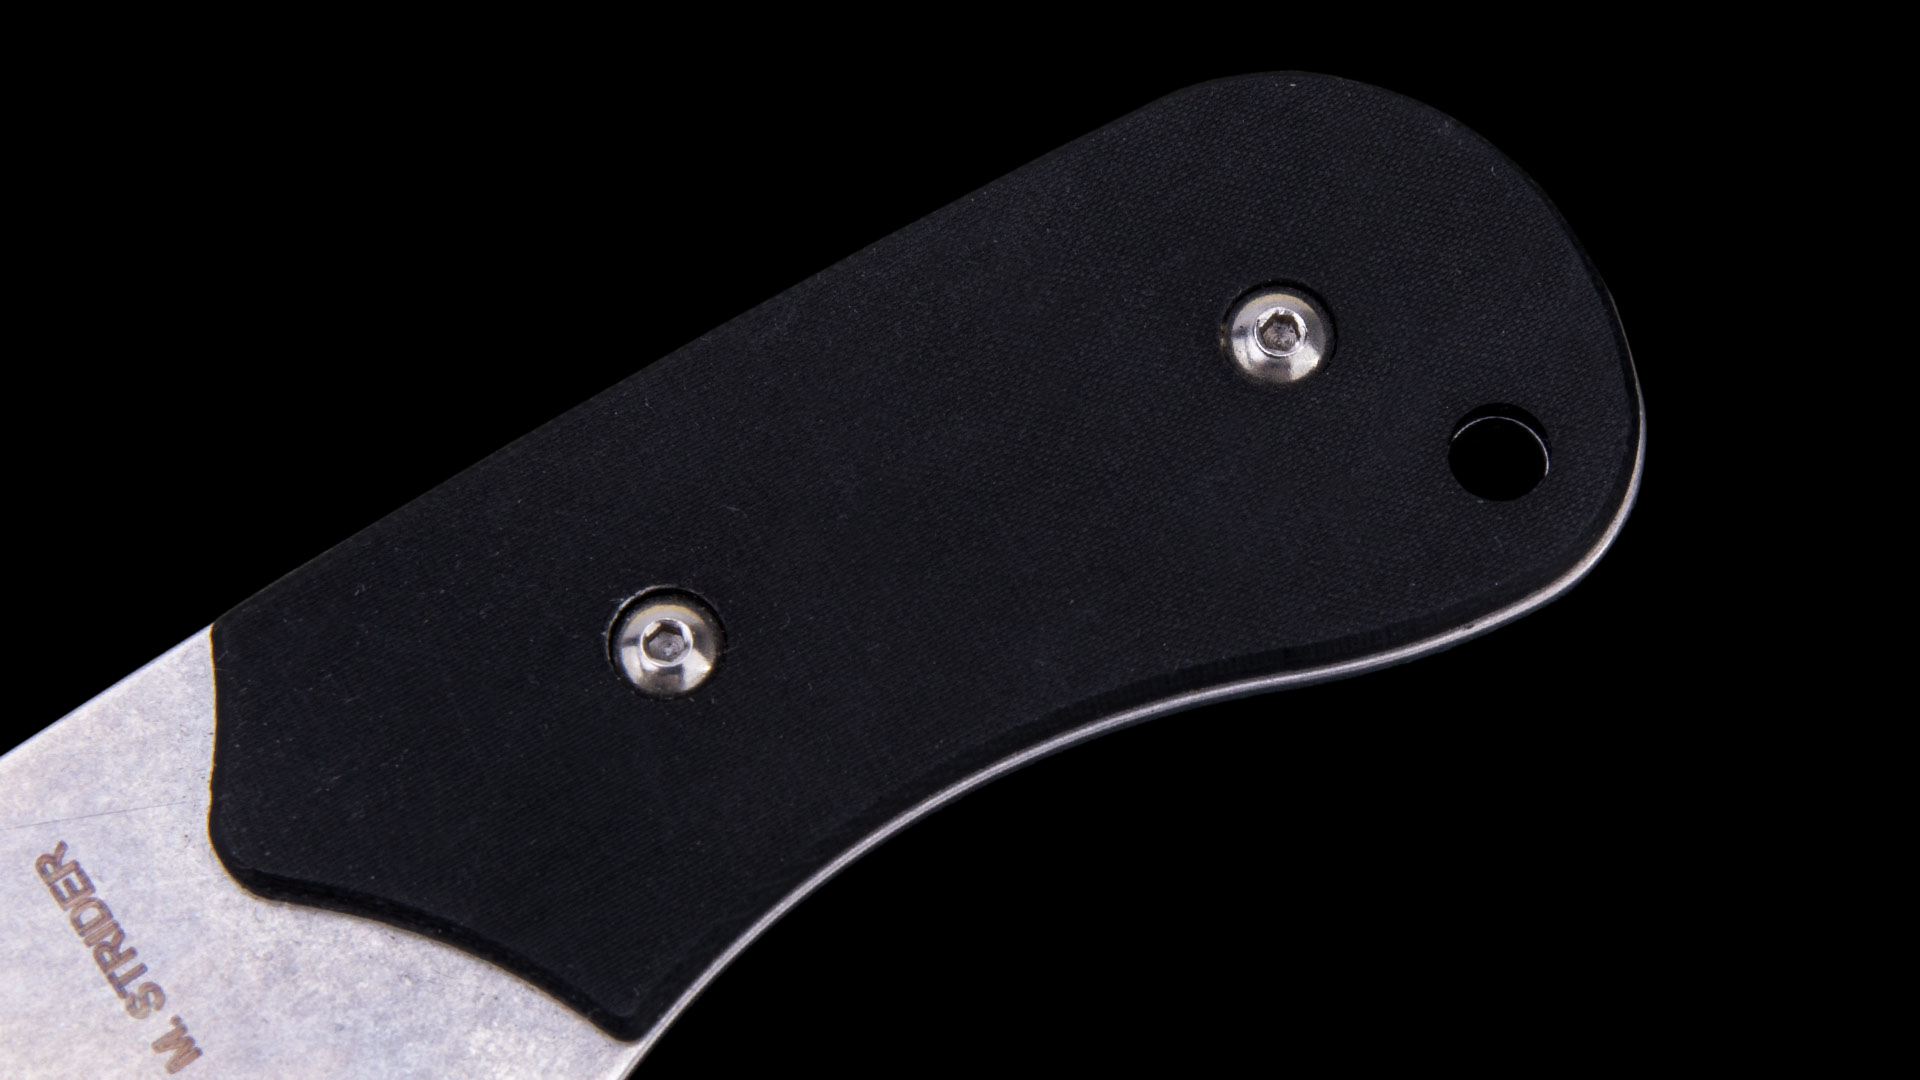 STRIDER挺进者这款直刀作品采用全龙骨结构使得这把刀非常坚实，刀身两侧分别刻有M.STRIDER字样和挺进者标志图案